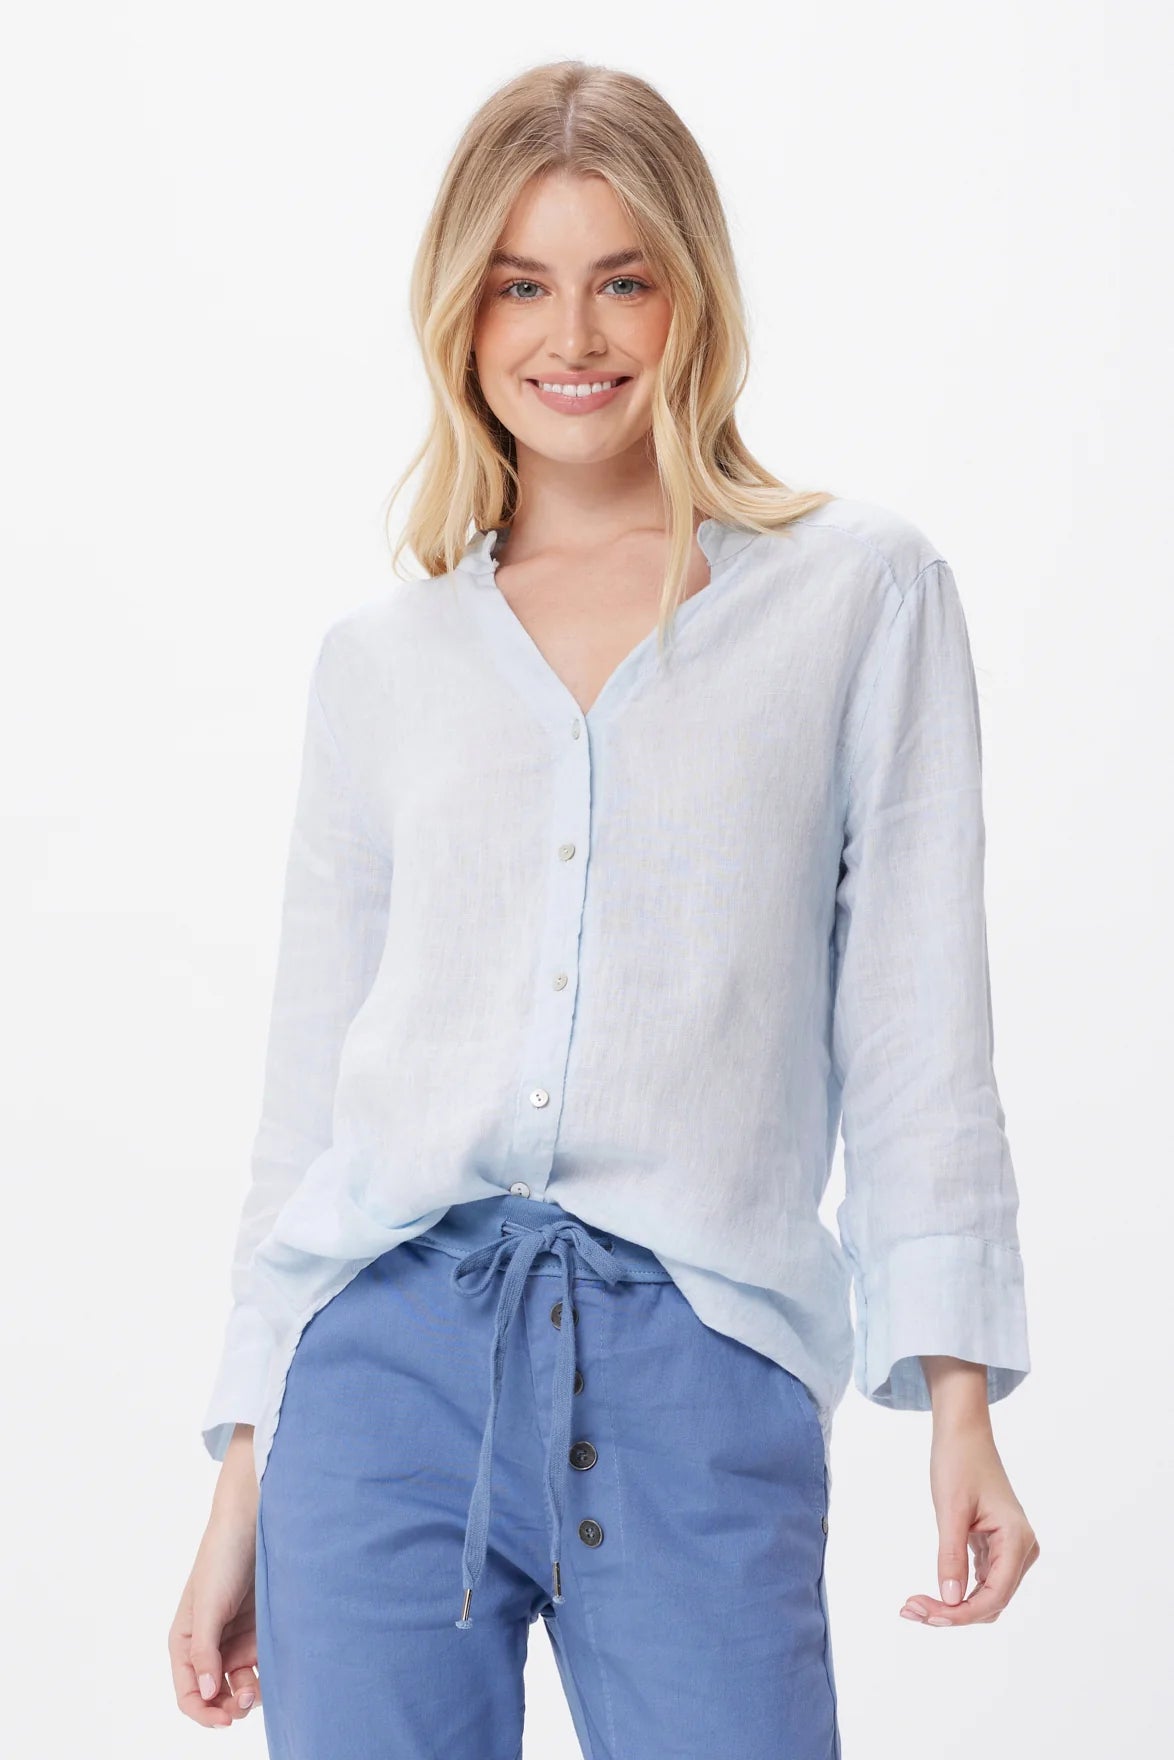 Suzy D Madison V-Neck Linen Shirt in Cloud Blue